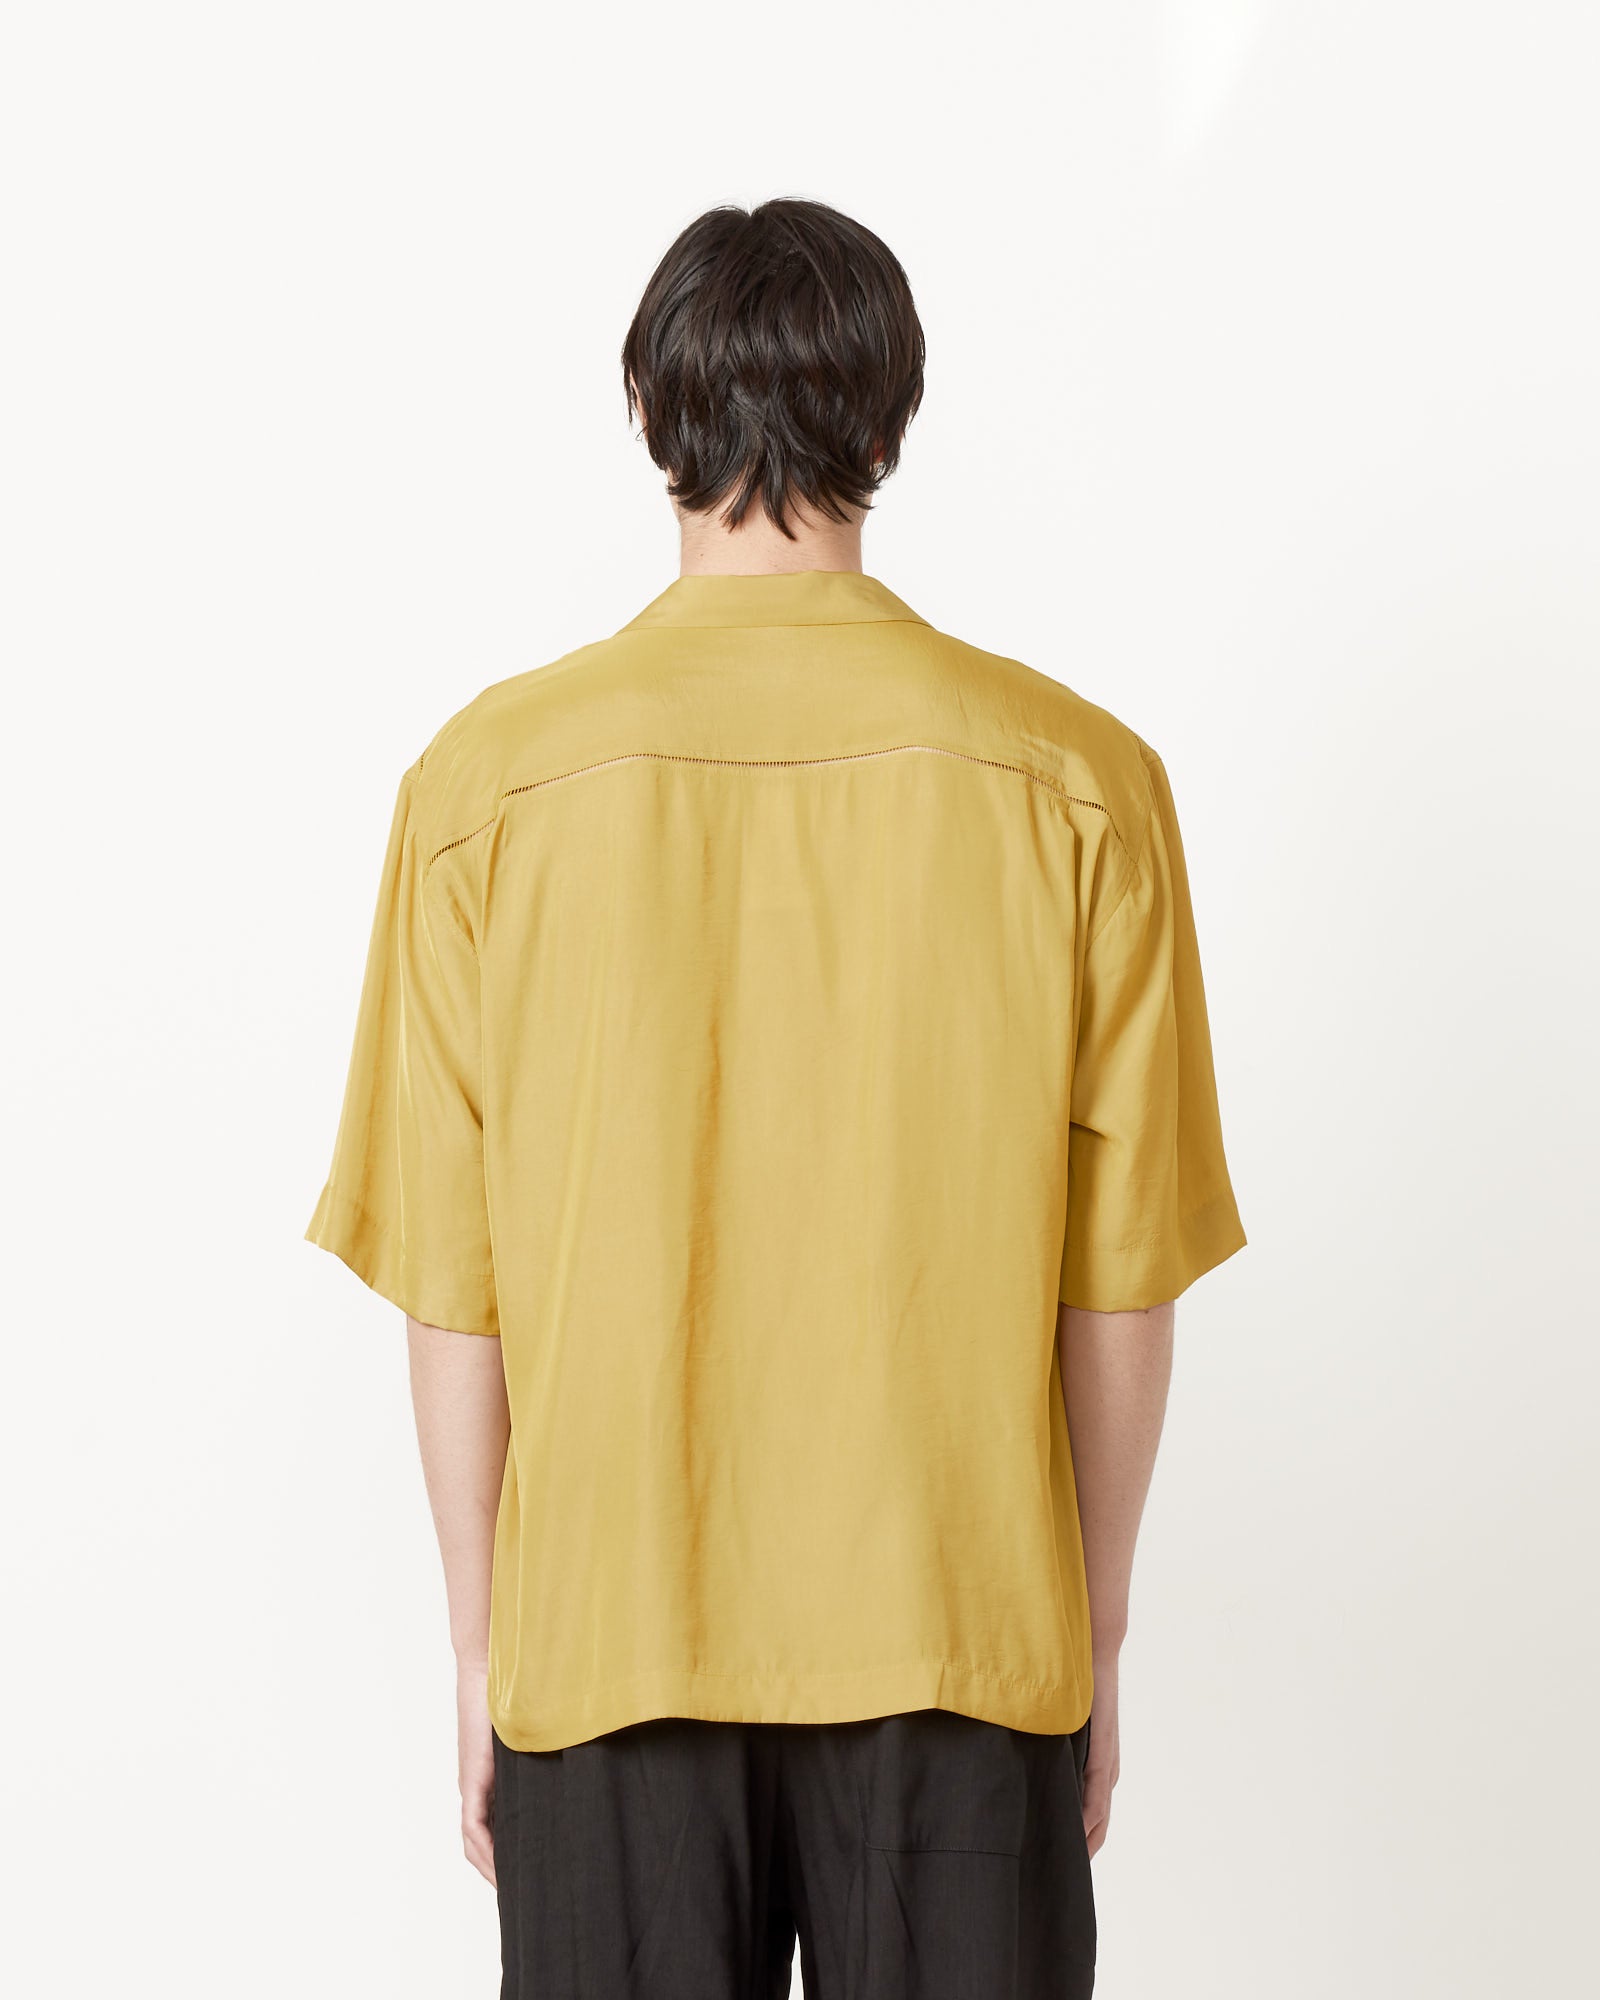 Paneled Short Sleeve Shirt in Mustard